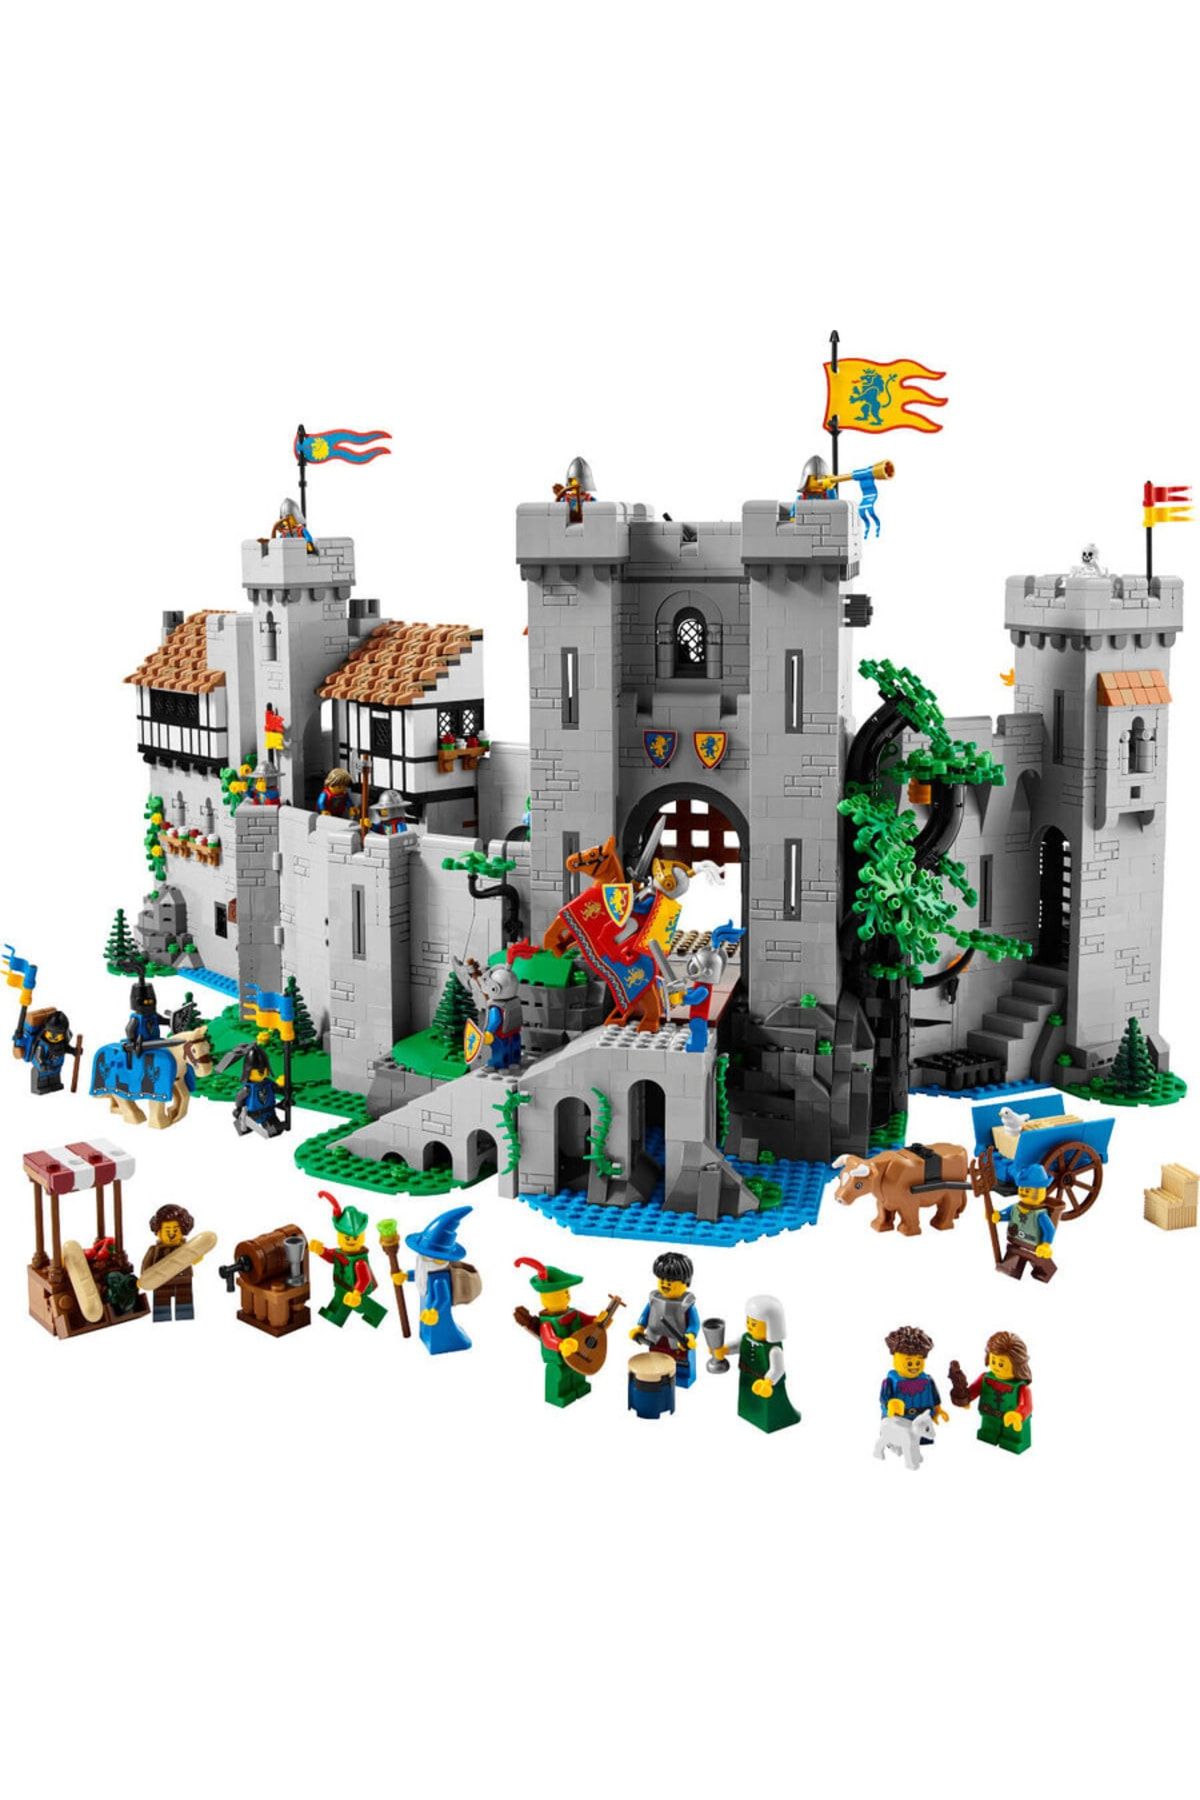 LEGO لگو Icons 10305 Lion Knights' Castle (4514 قطعه)